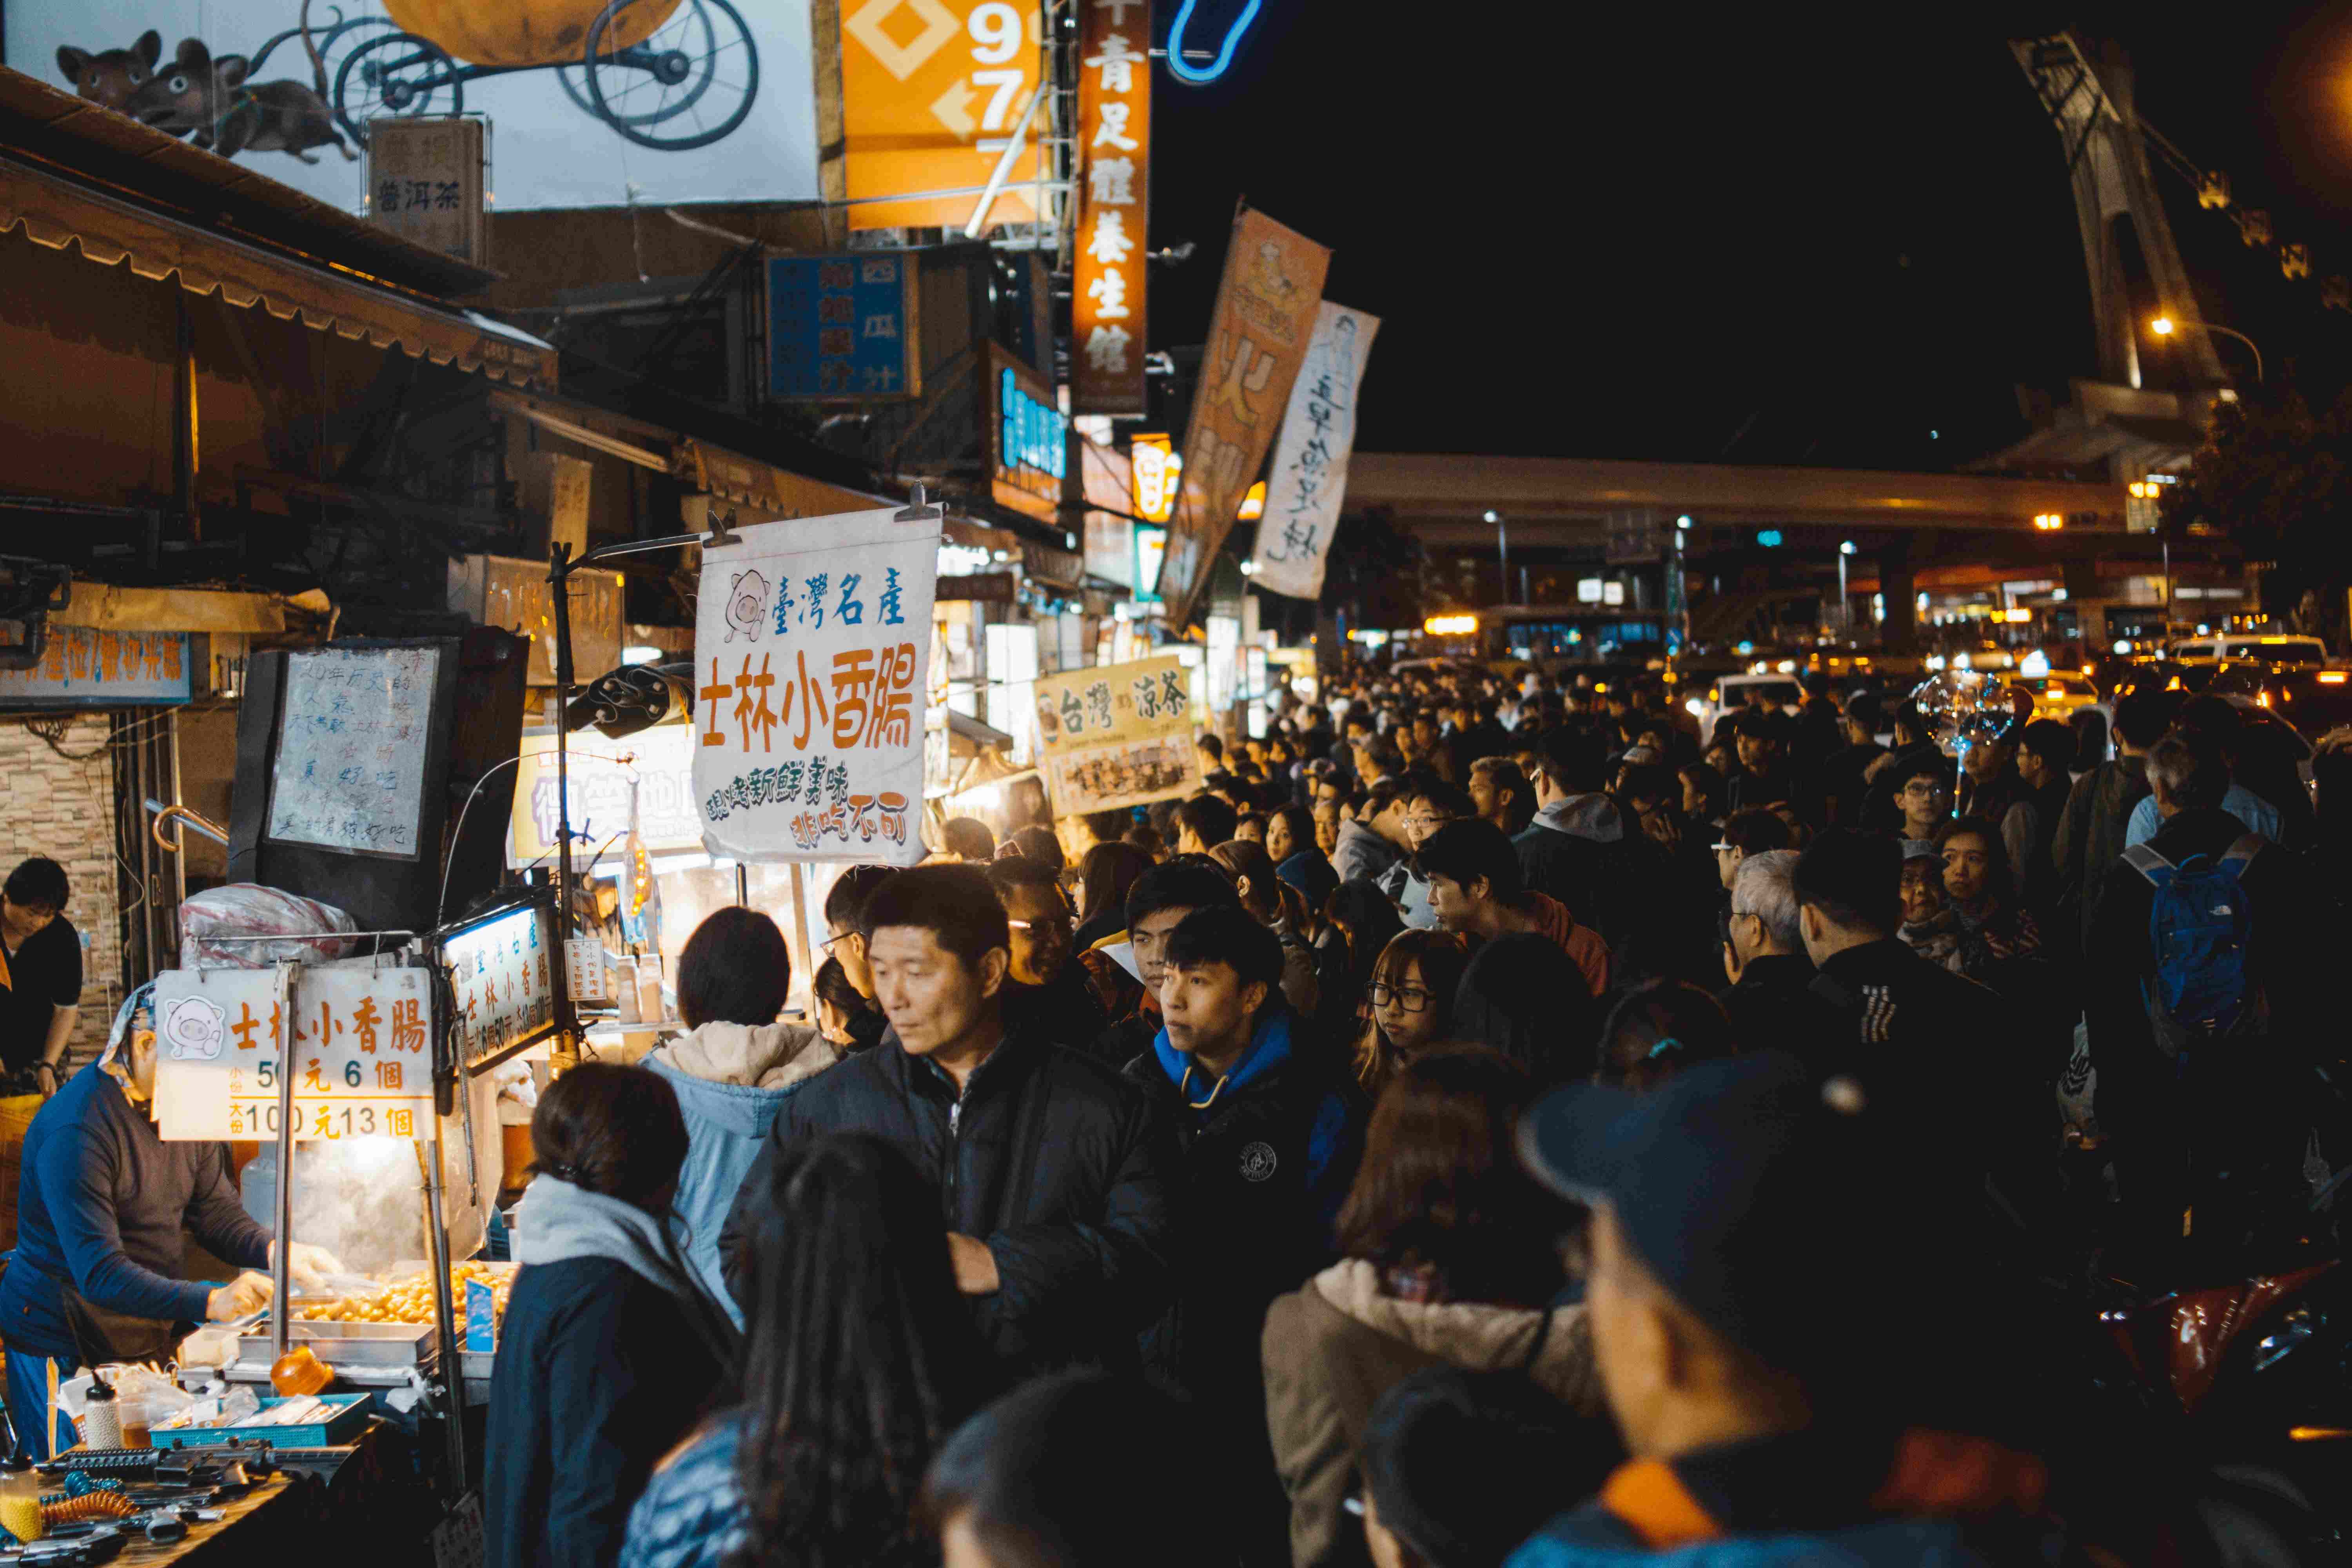 Taipei Shilin Night Market by Mark Oh on Unsplash